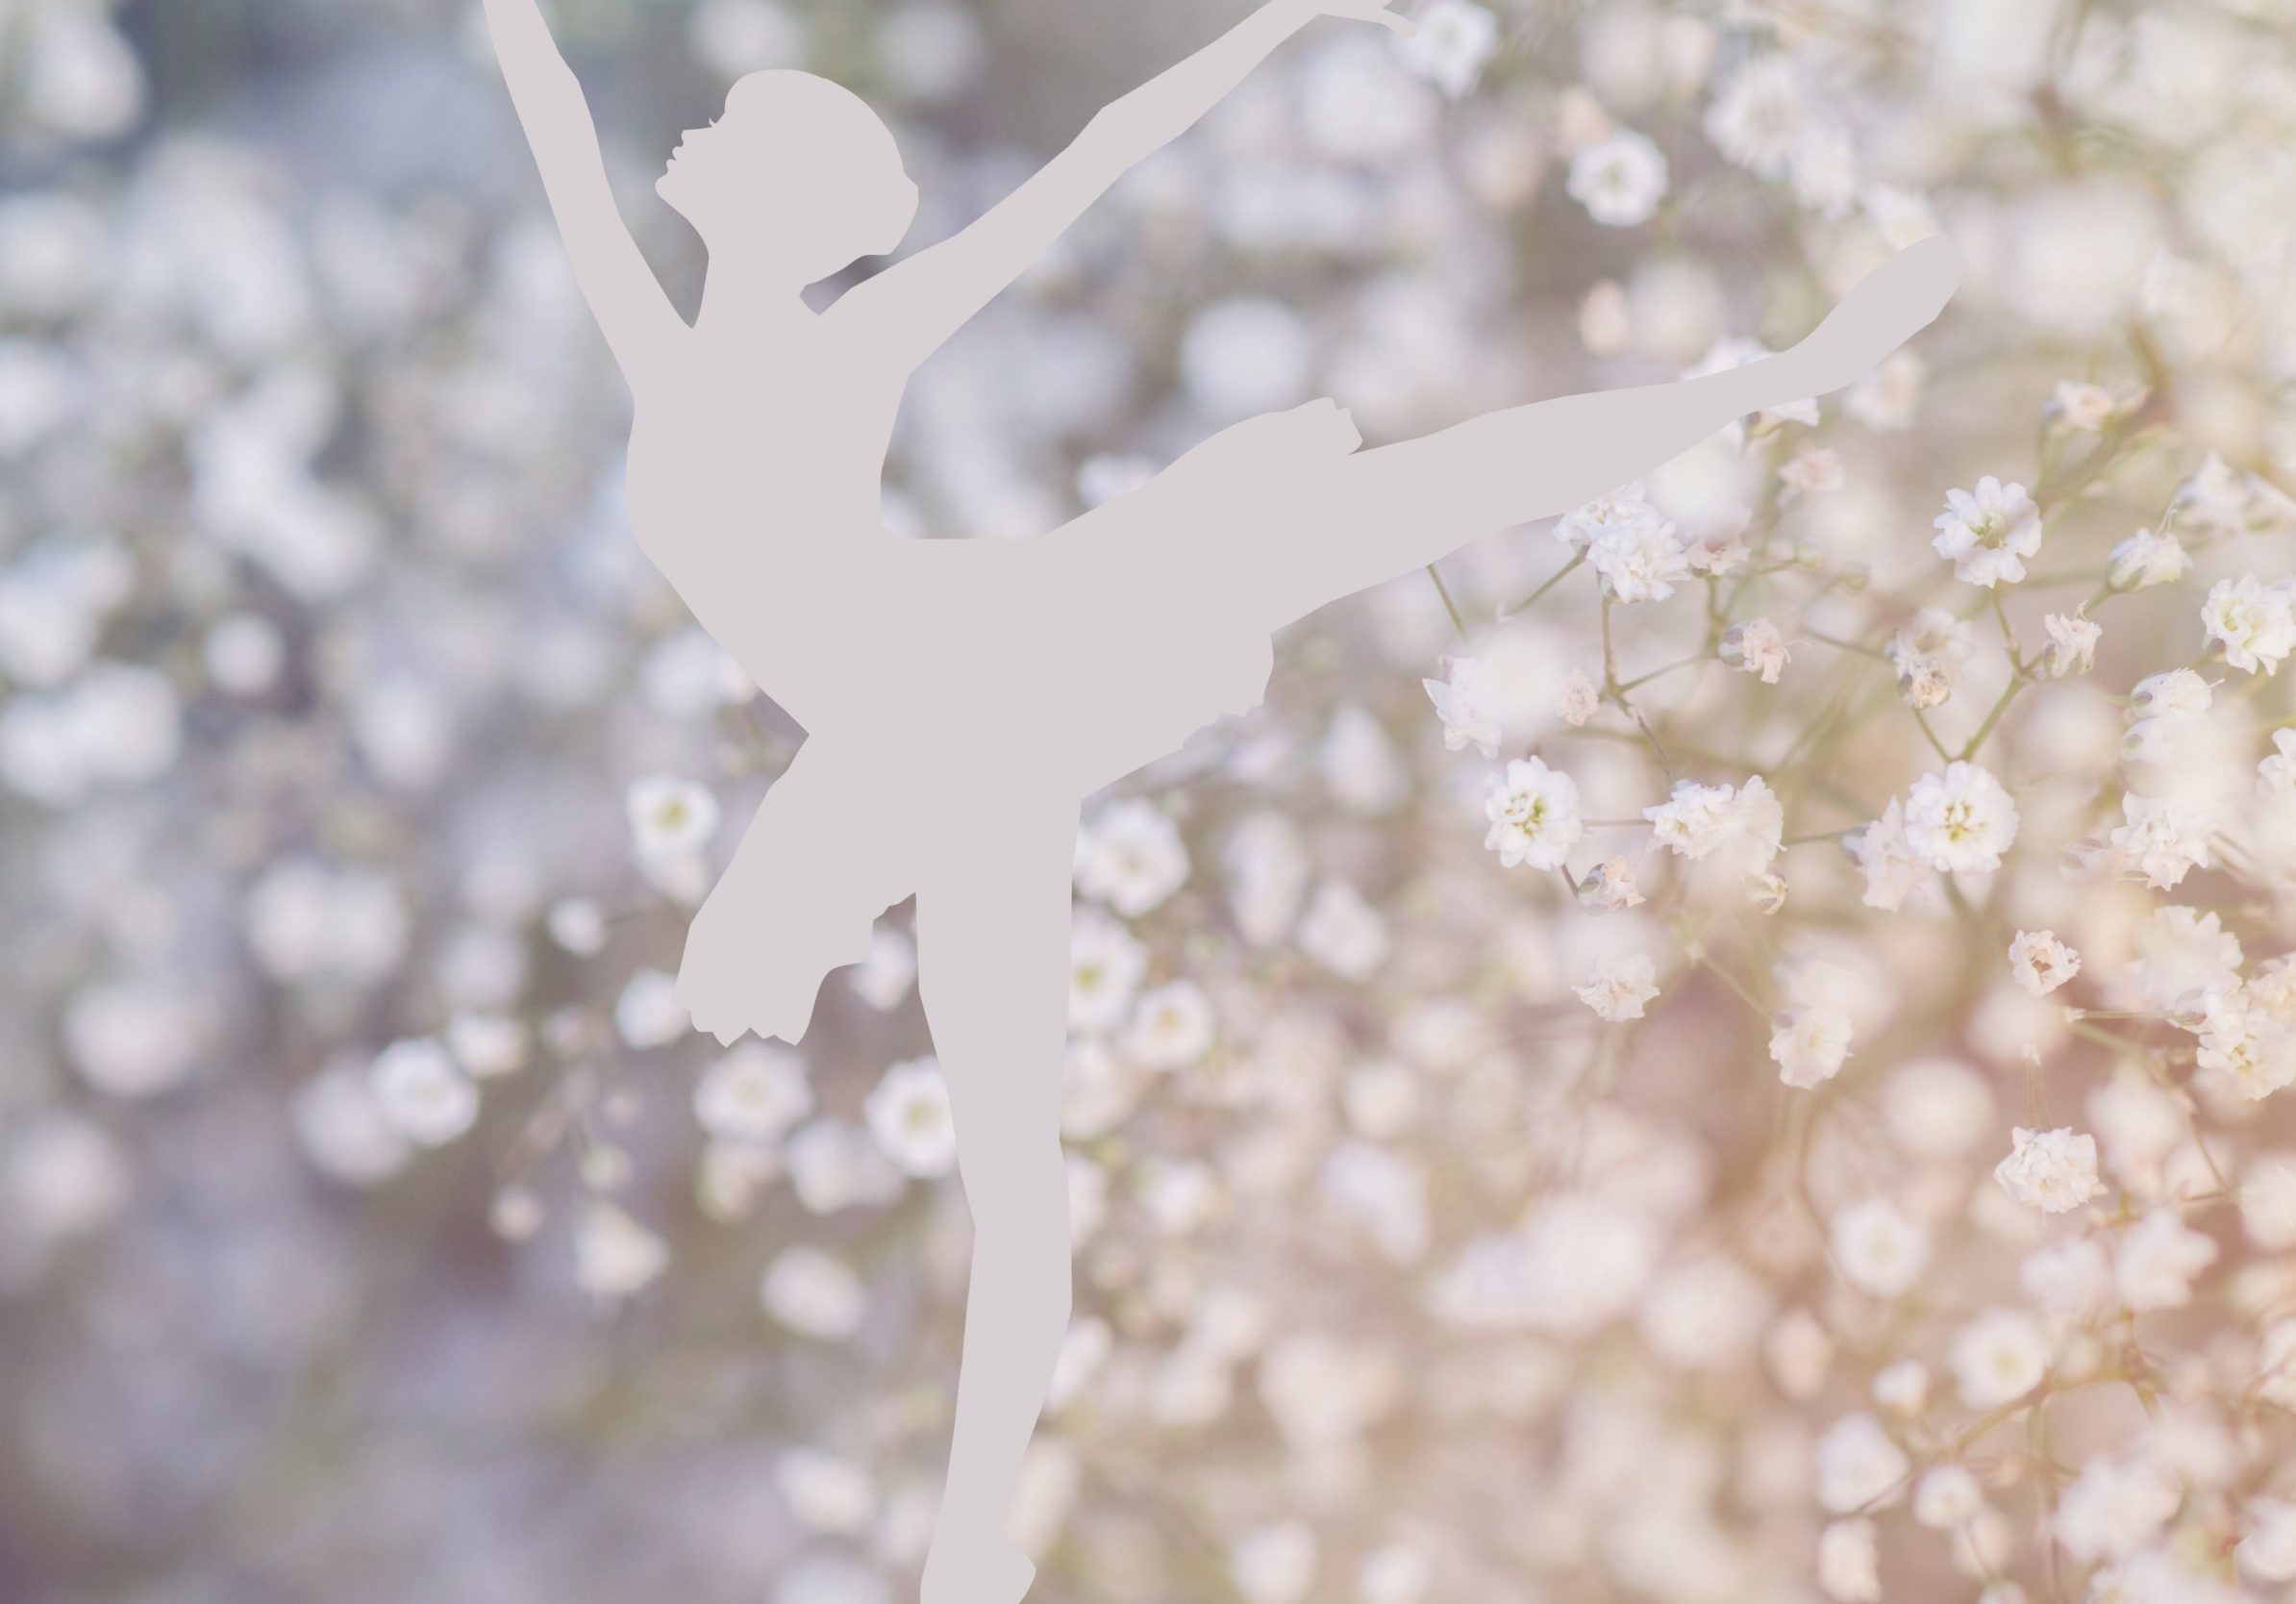 2388x1668 iPad Pro wallpapers Ballerina Girl Dance White Dandelion Flowers iPad Wallpaper 2388x1668 pixels resolution